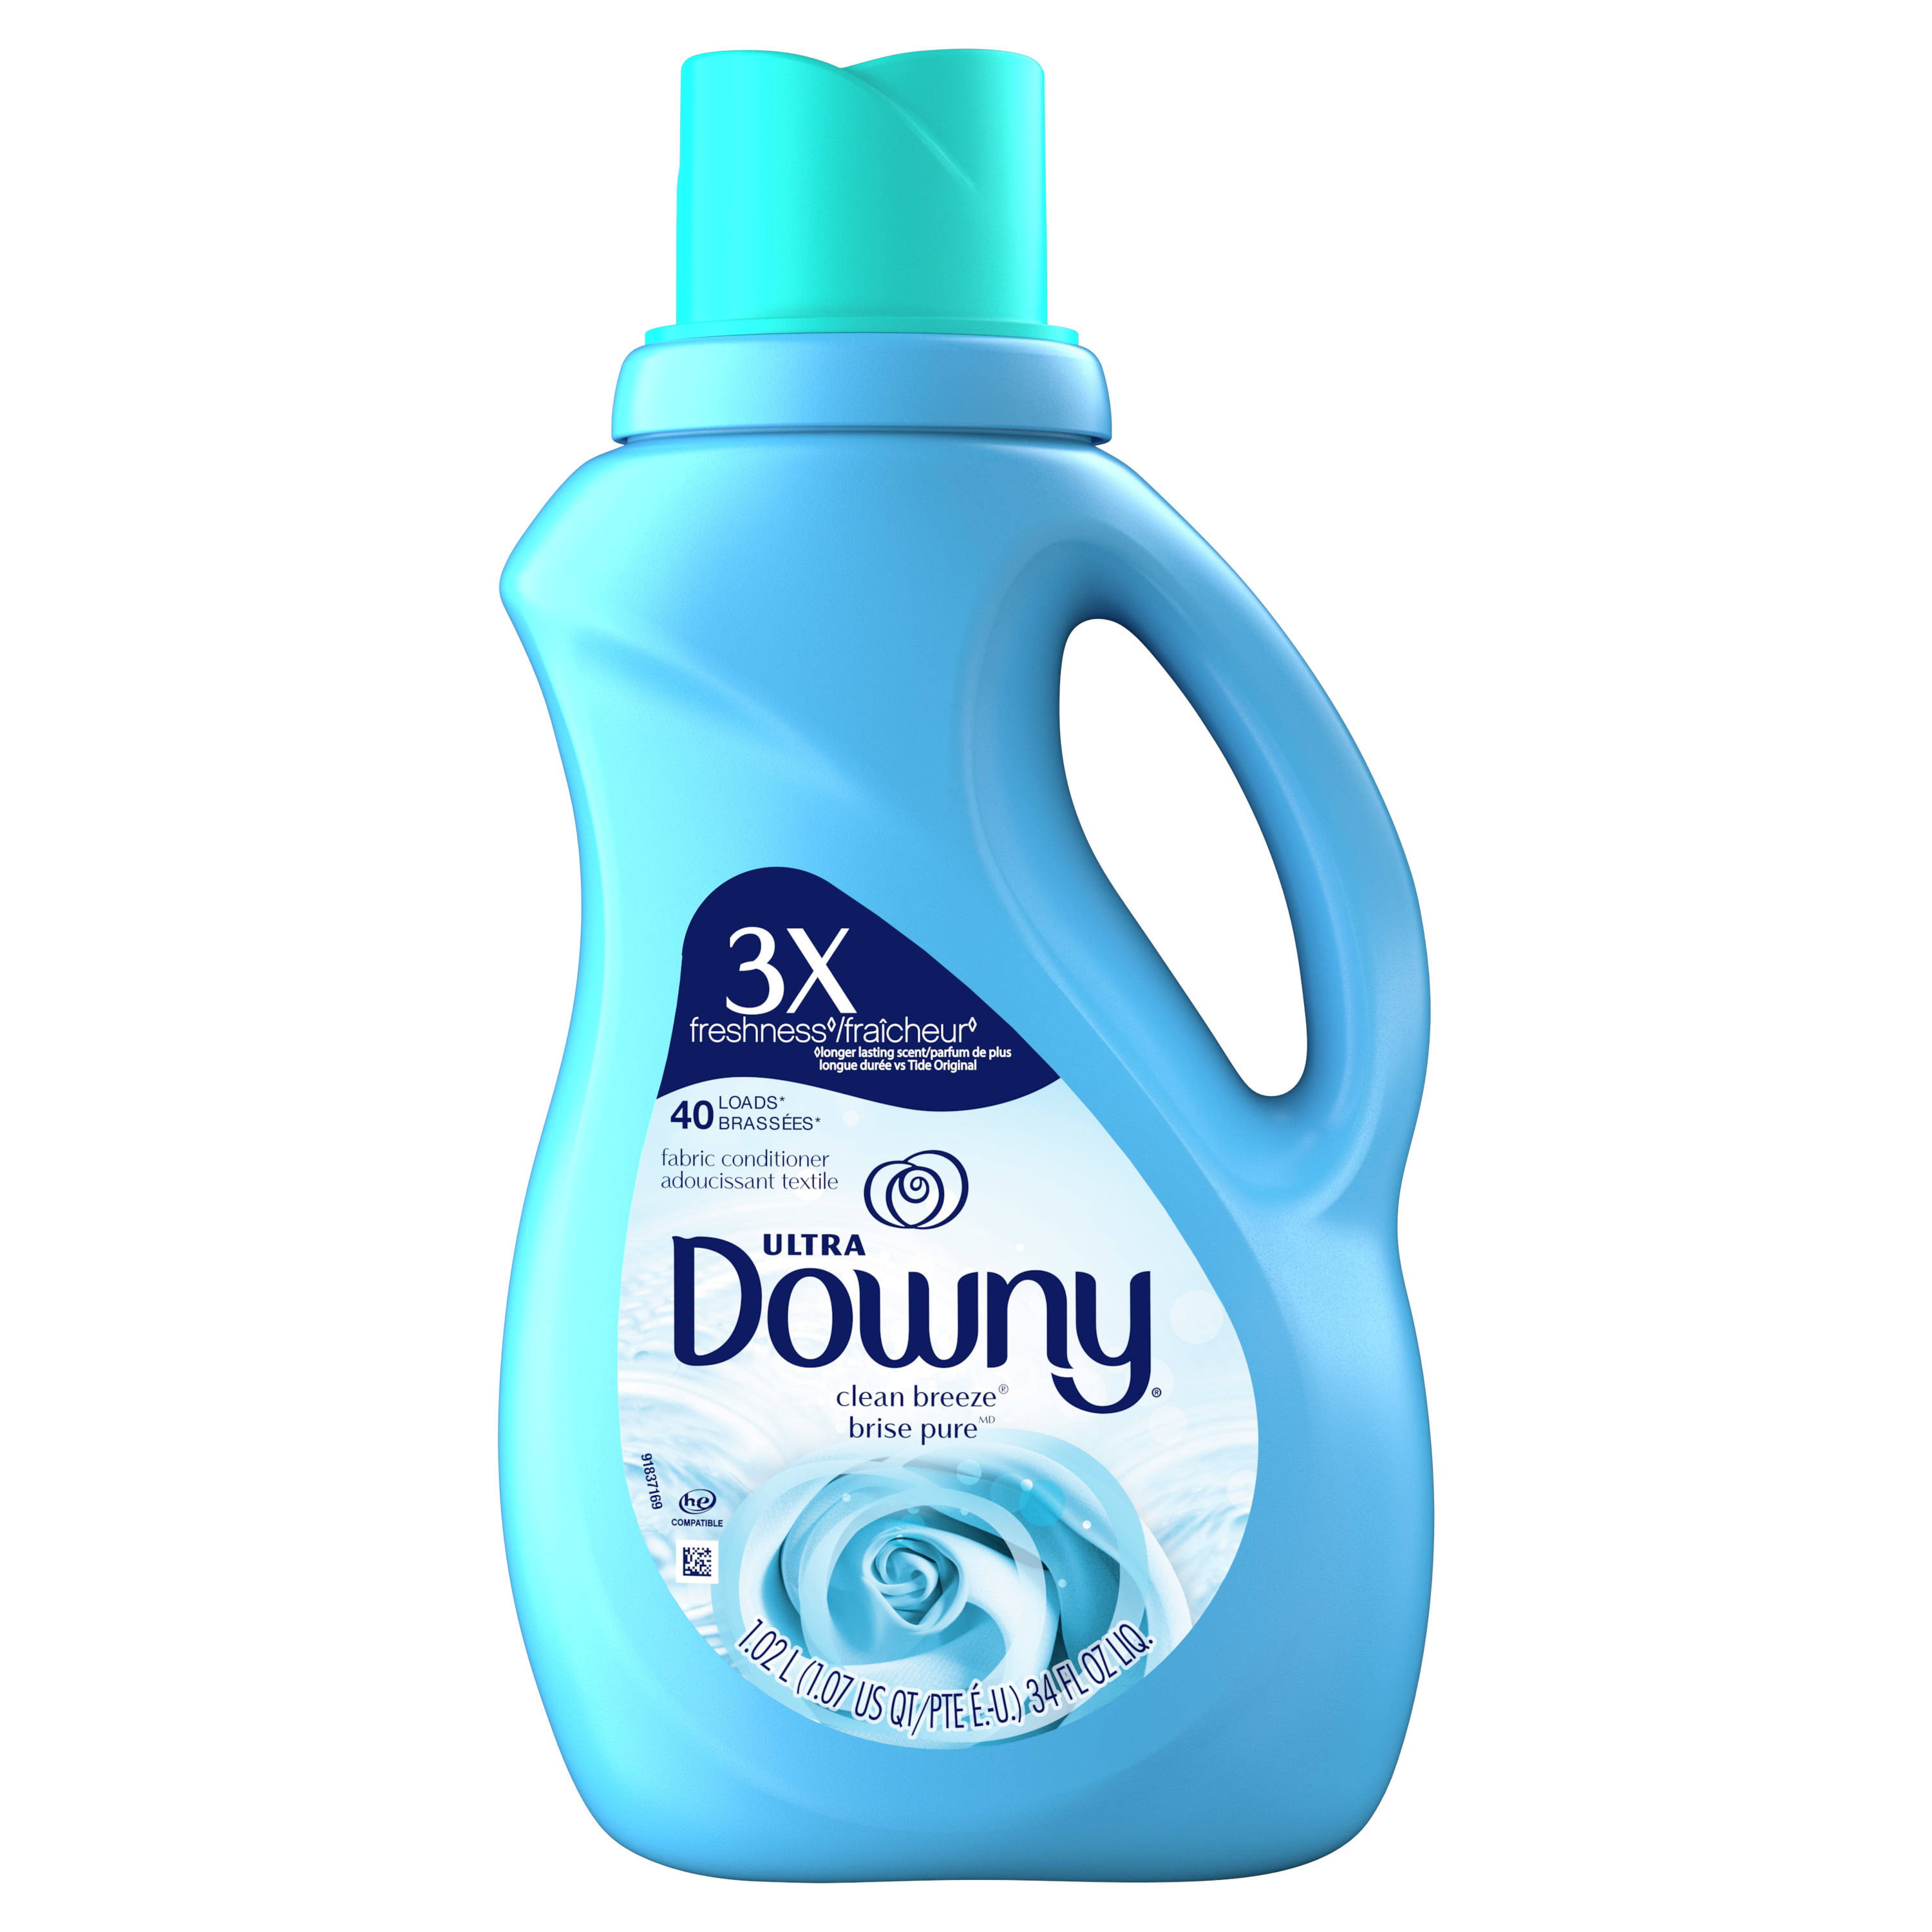 Downy Ultra Liquid Fabric Softener - Clean Breeze